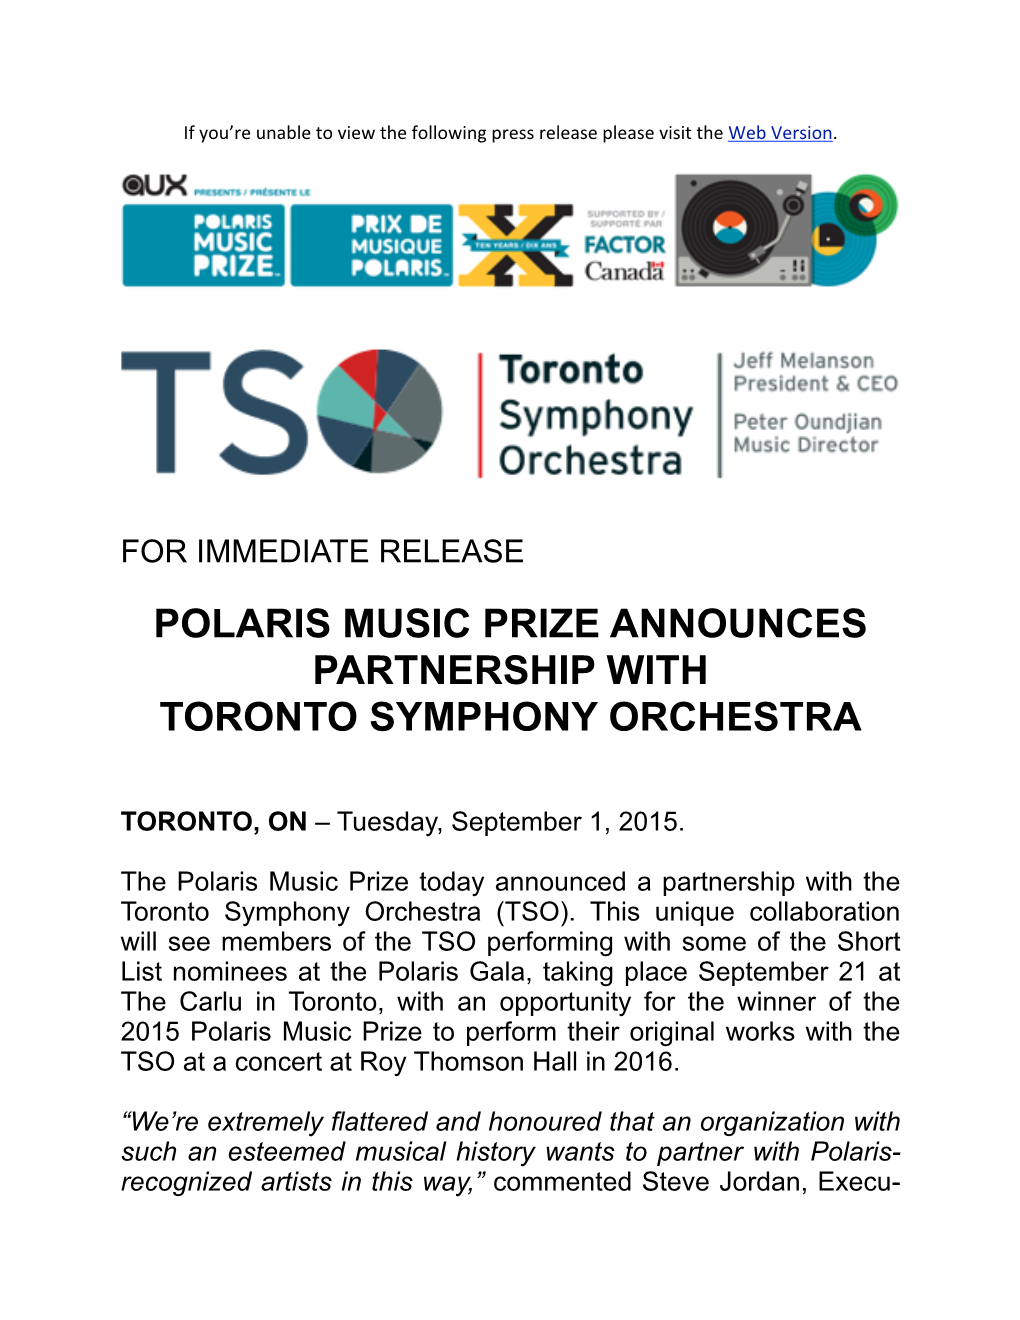 Polaris Music Prize Announces Partnership with Toronto Symphony Orchestra